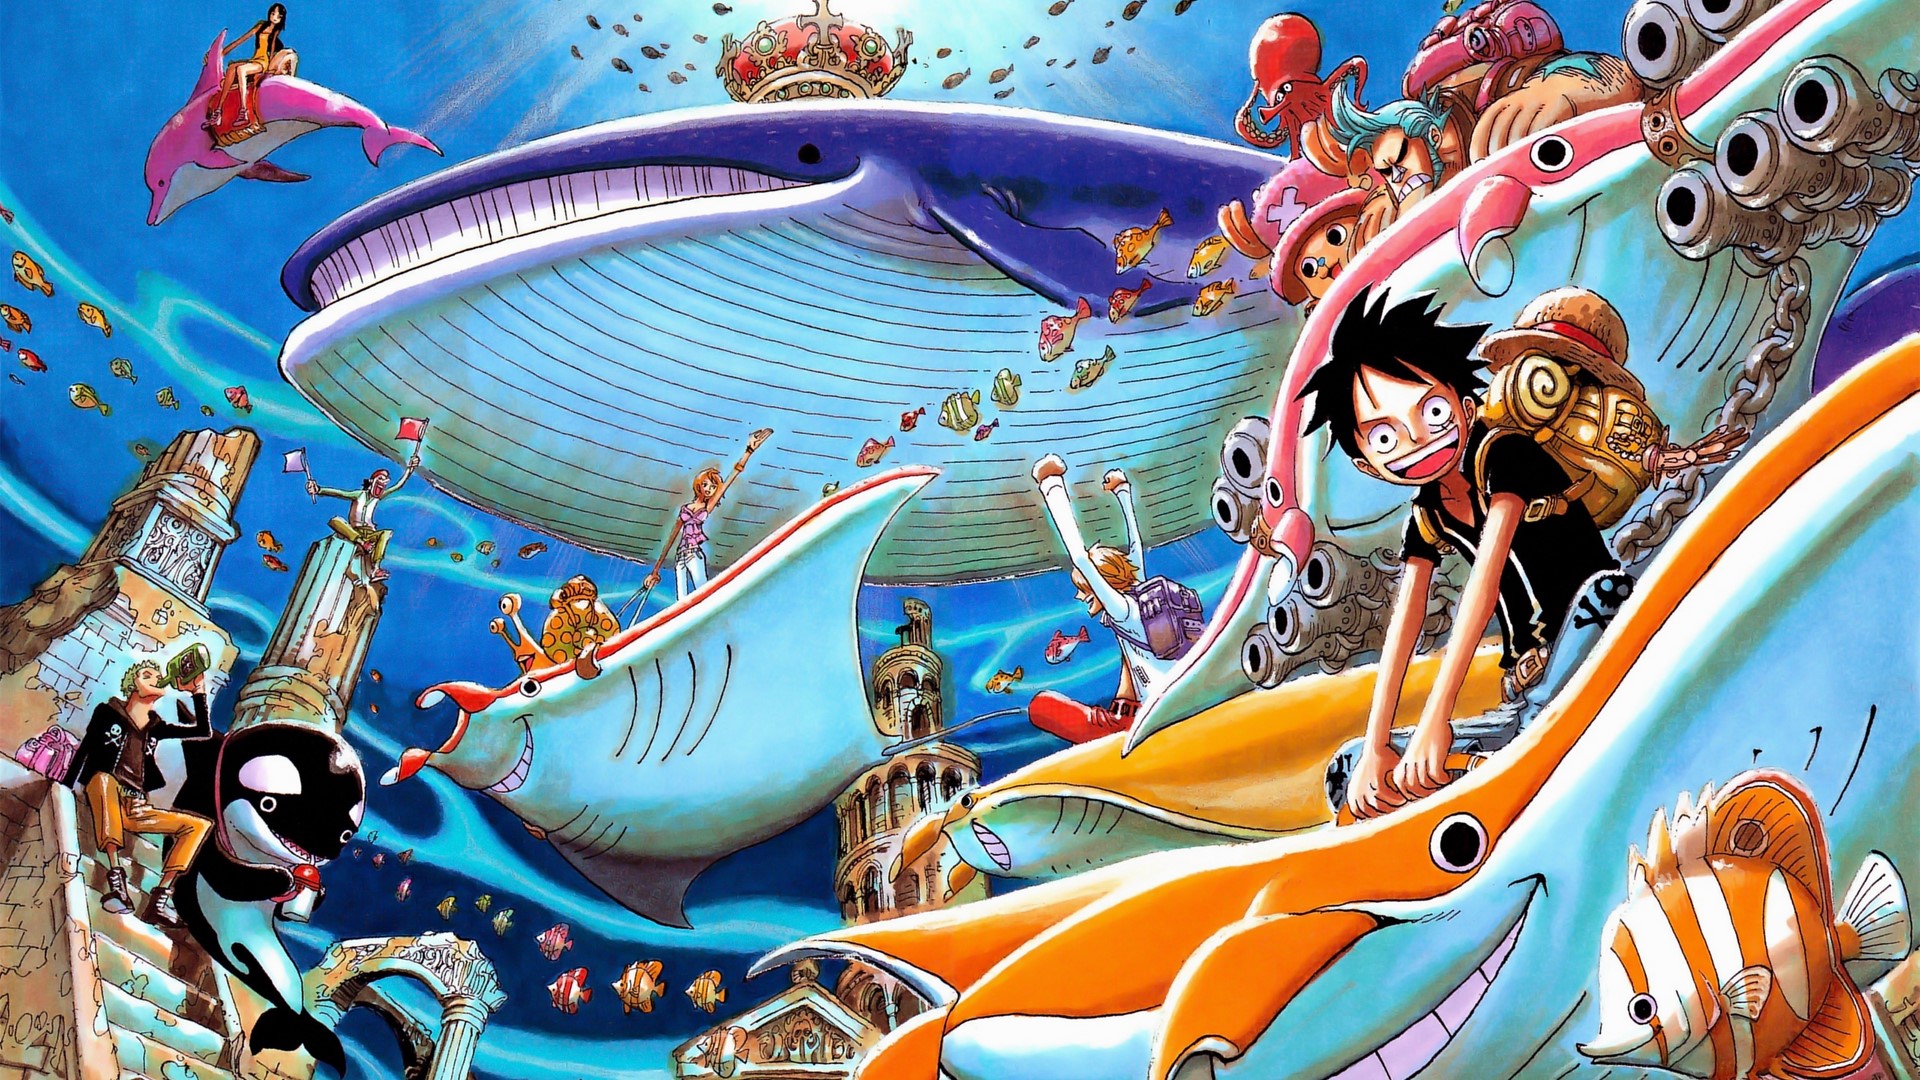 One Piece ワンピース の超高画質壁紙画像まとめ 16 22 Renote リノート